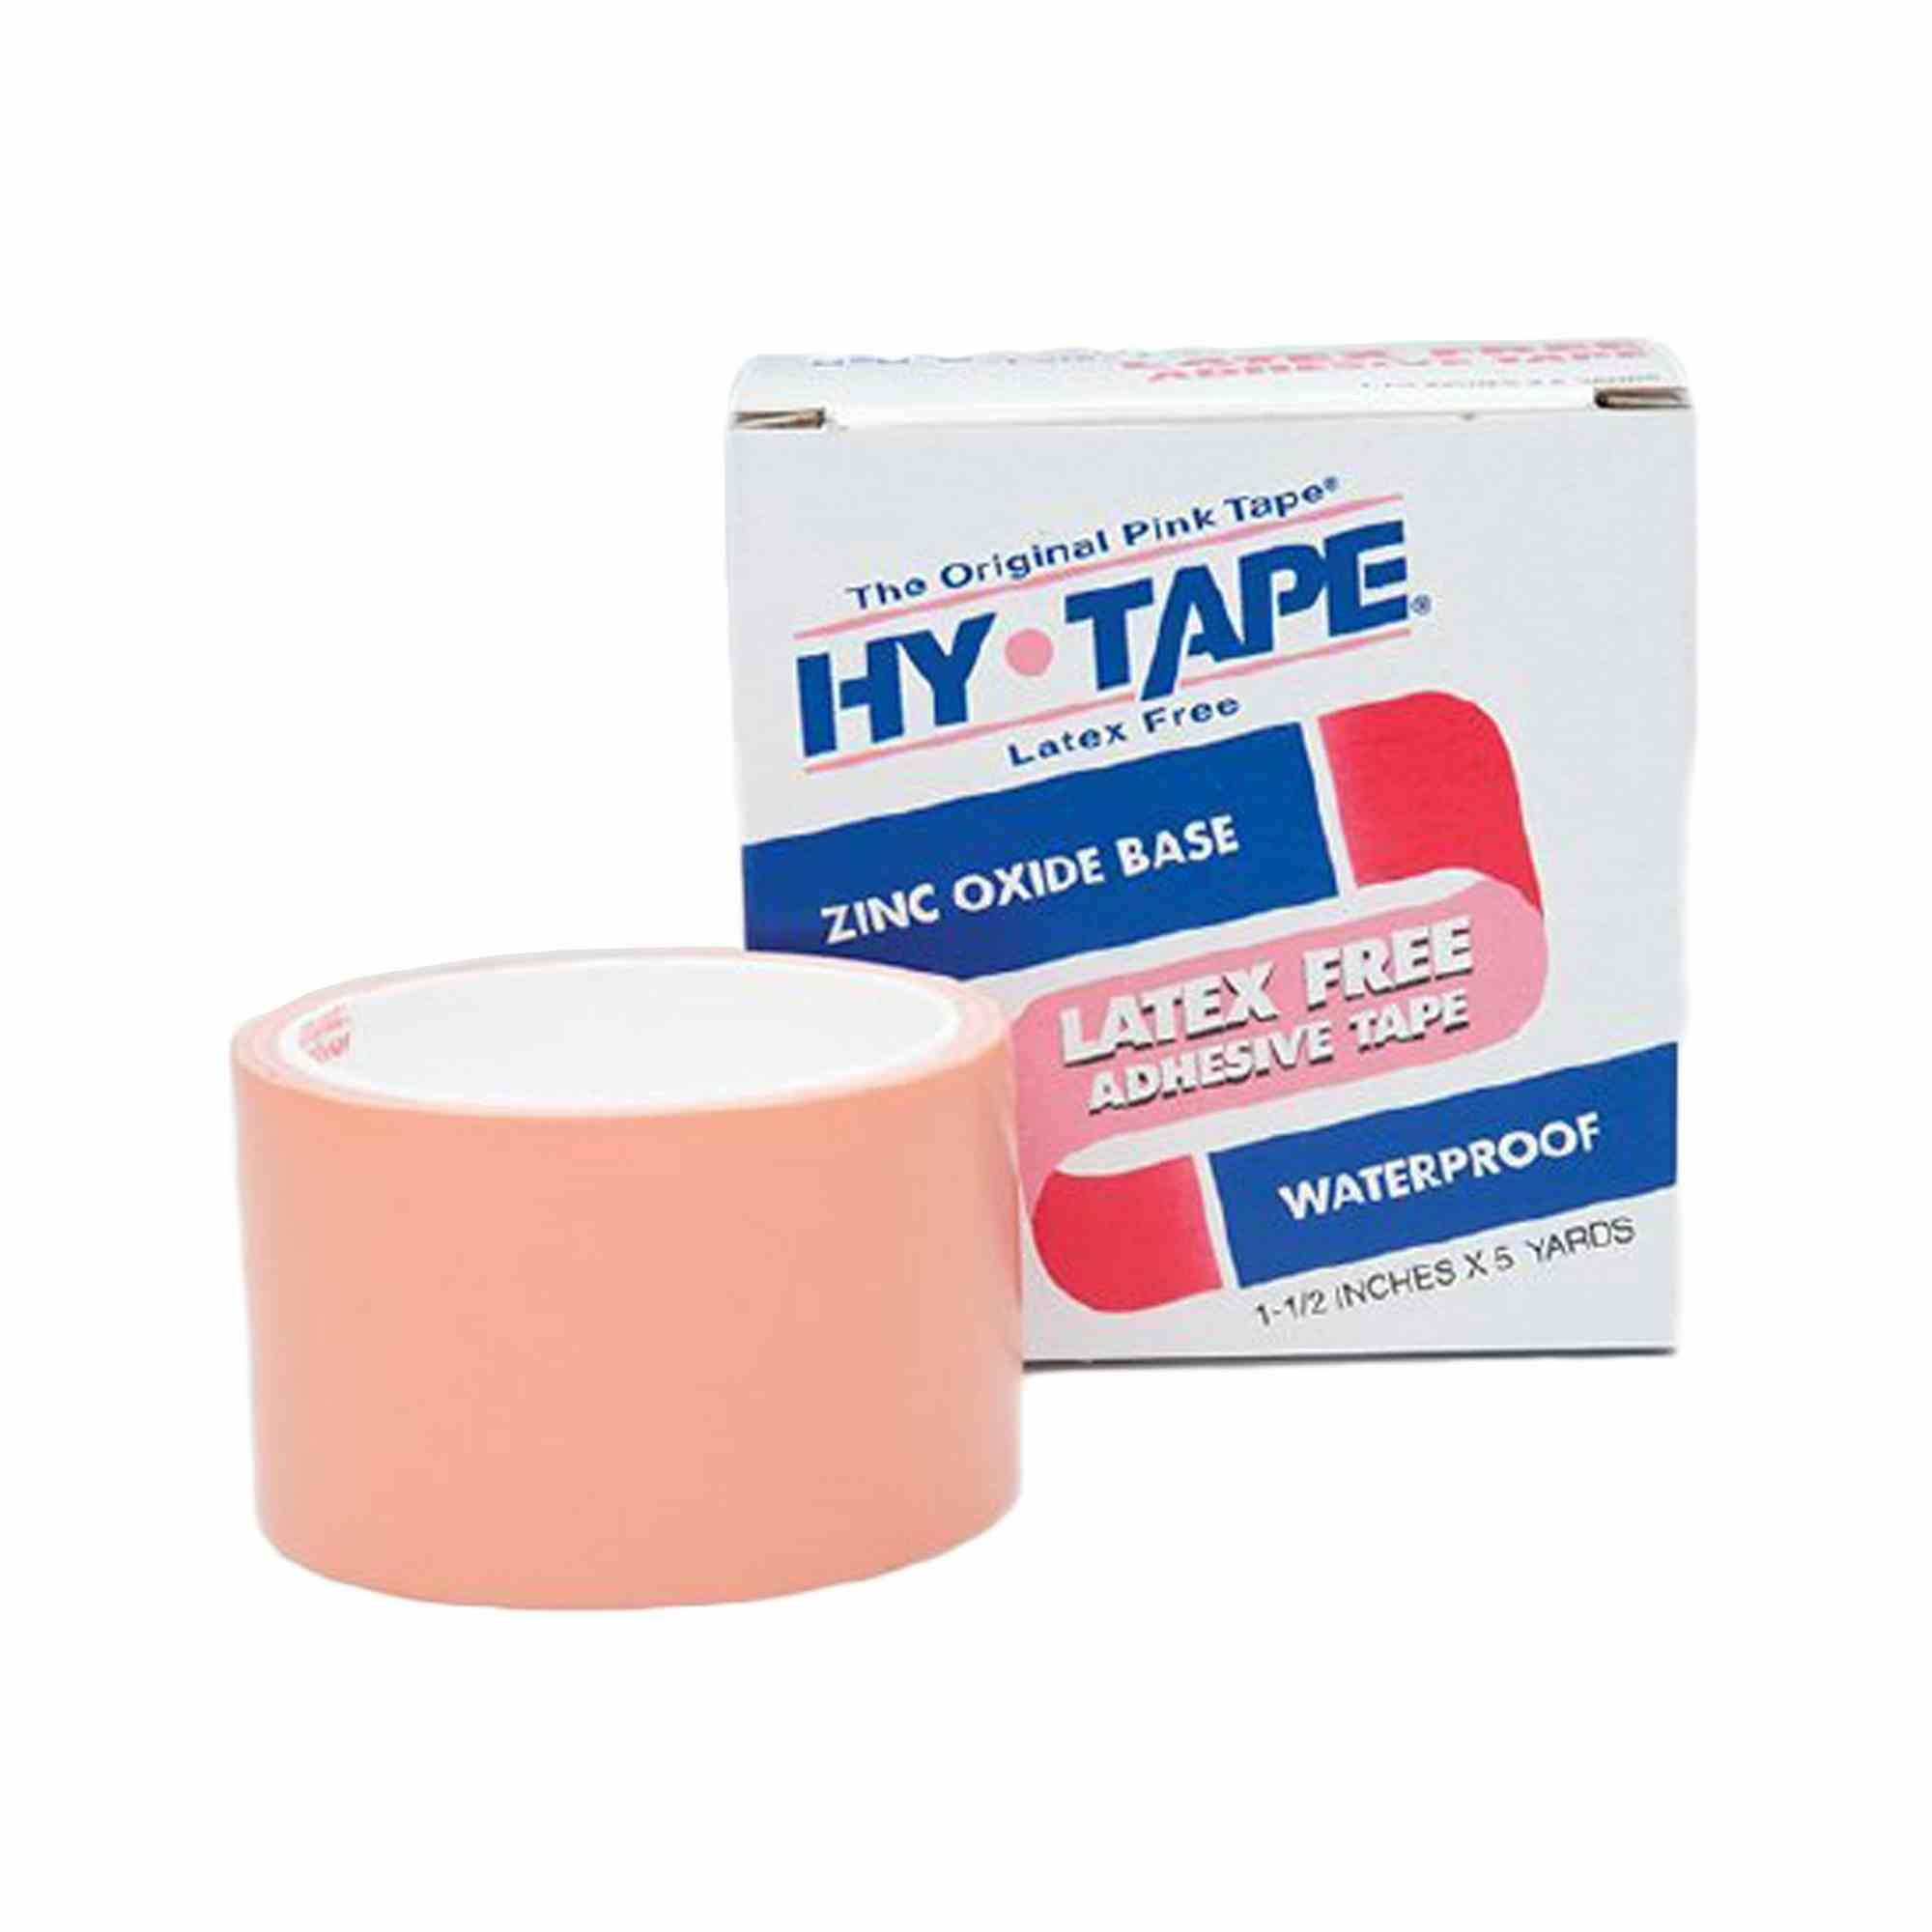 Hy-Tape Latex Free Zinc Oxide-Base Adhesive Tape, Waterproof, 1.5" X 5 yds, 115BLF, 1 Roll